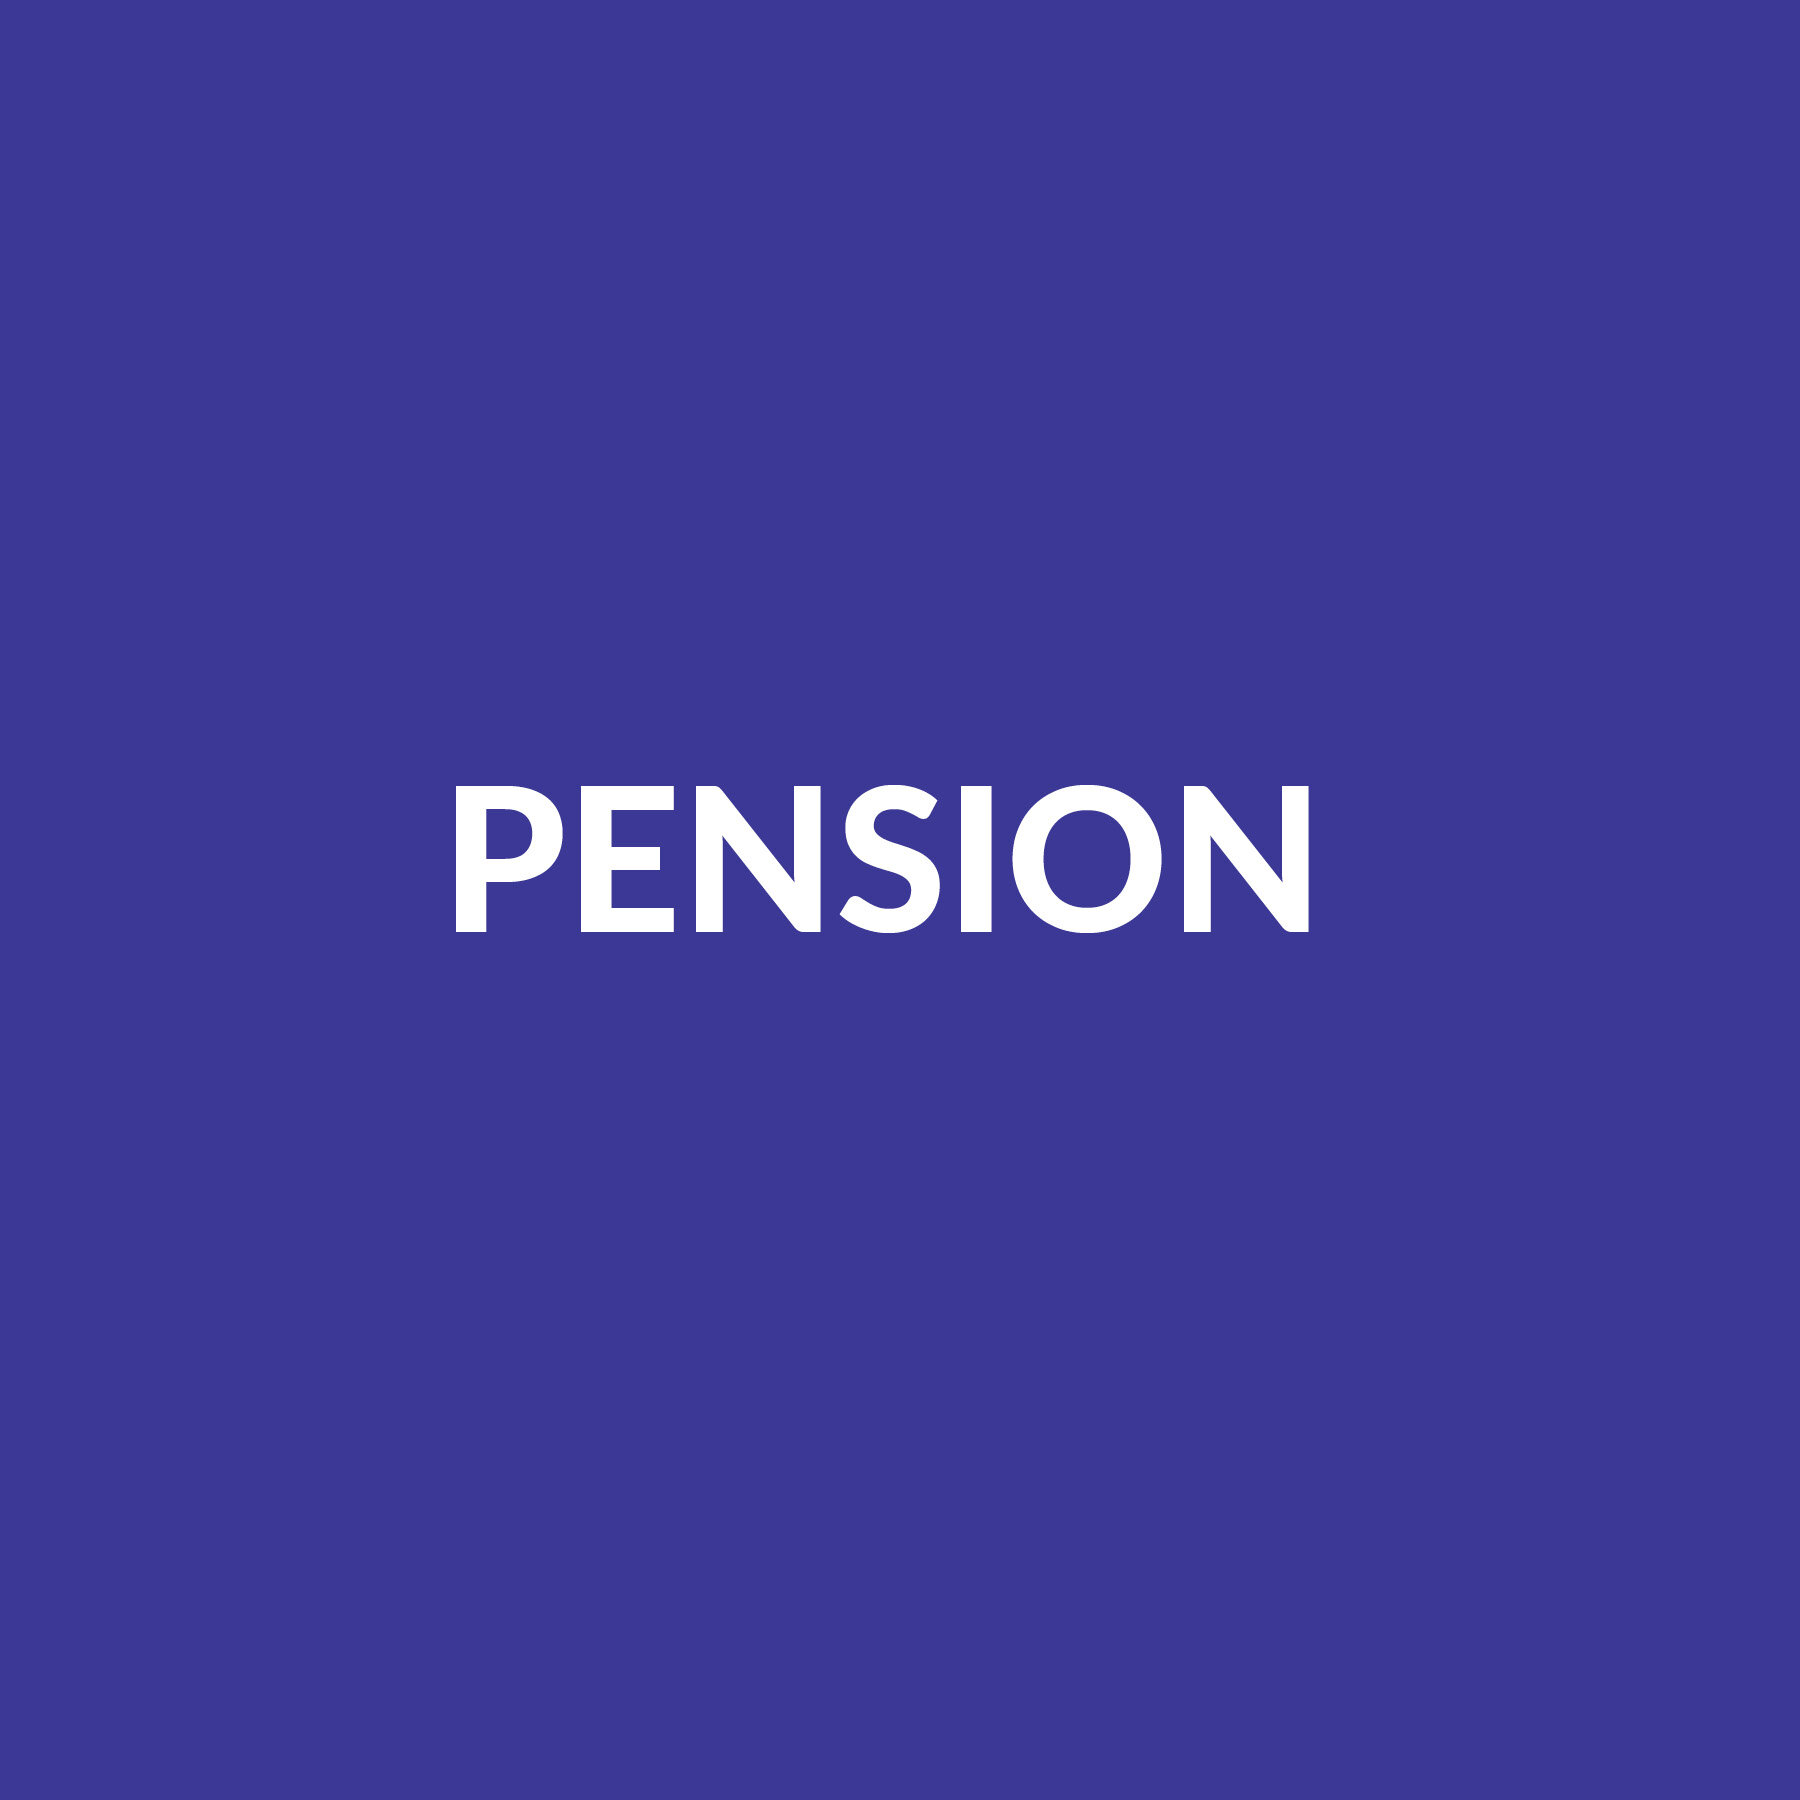 Pension icon.jpg